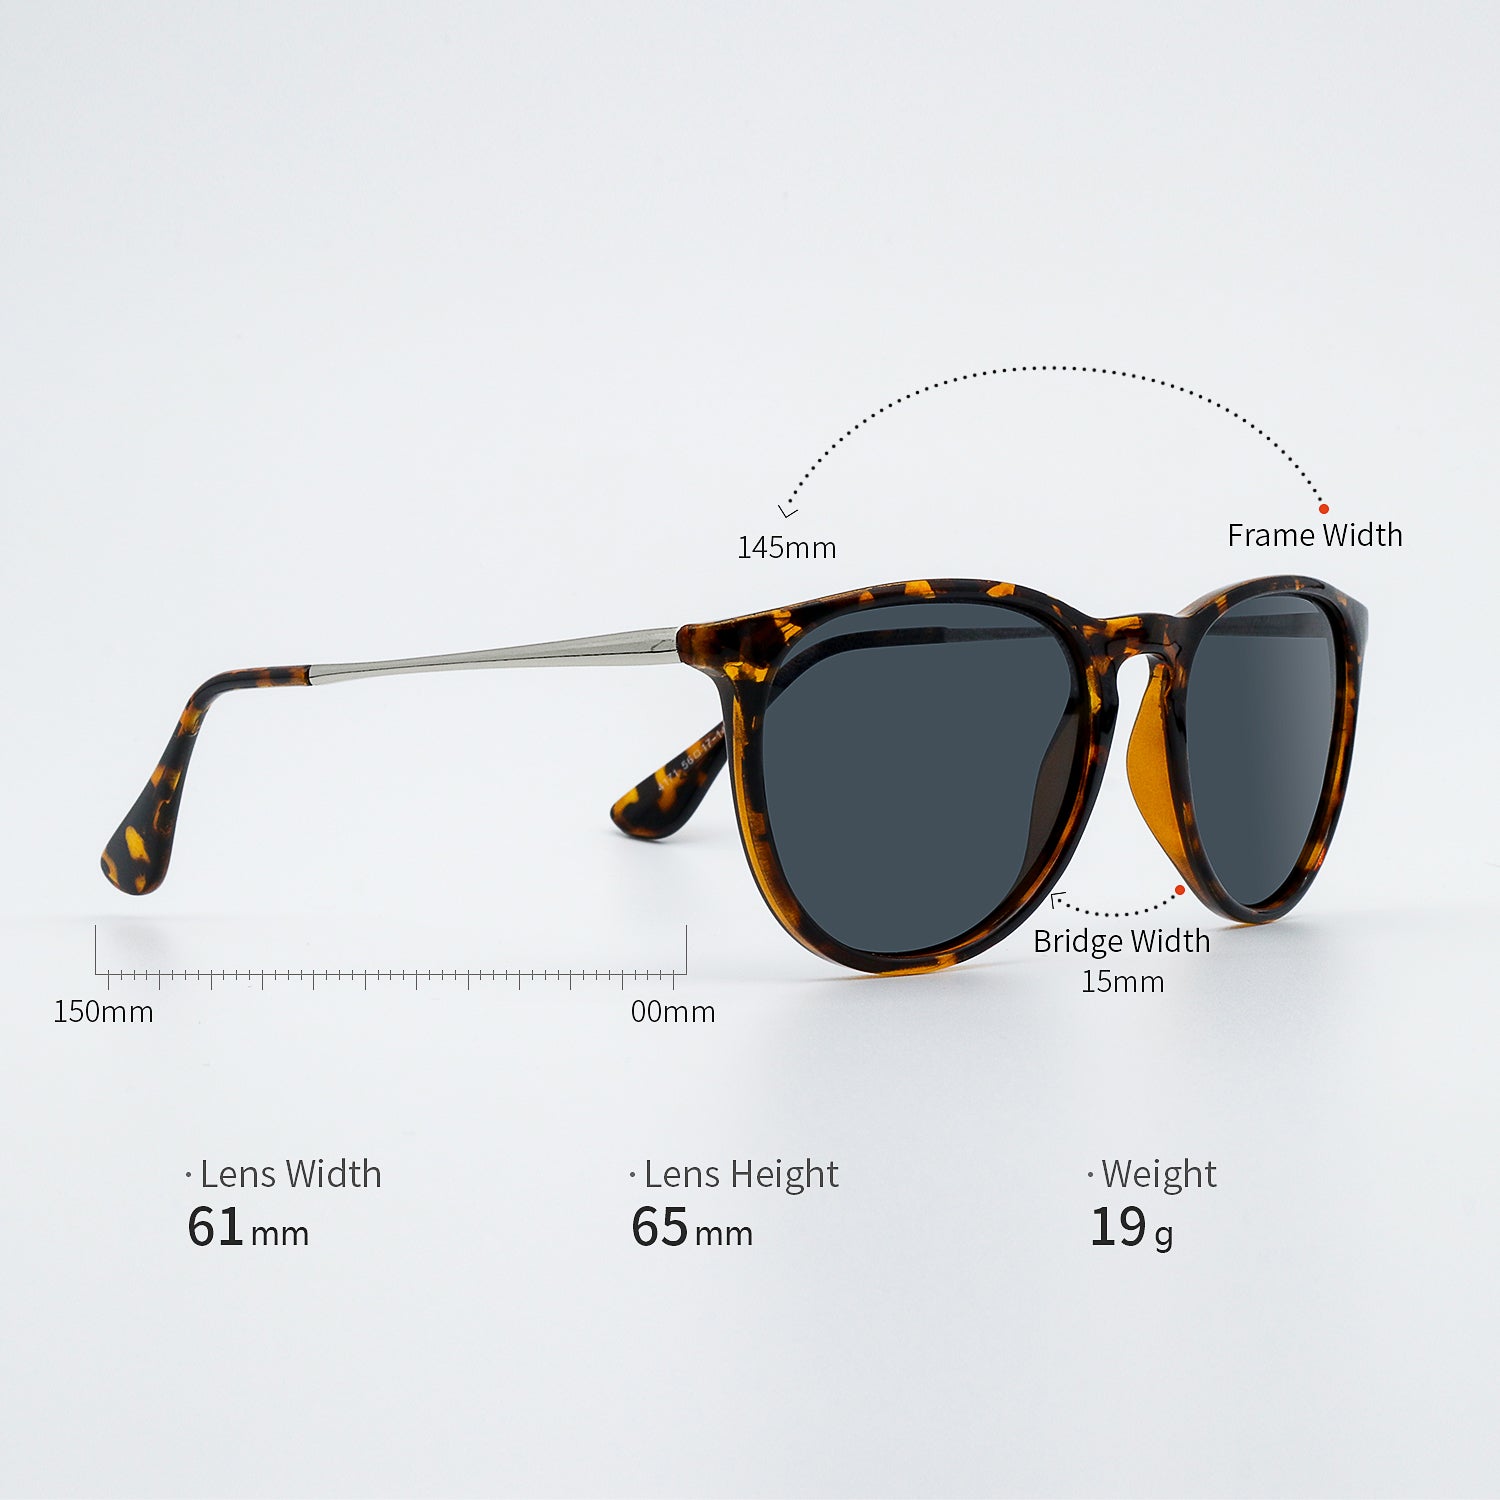 tortoiseshell frame sunglasses